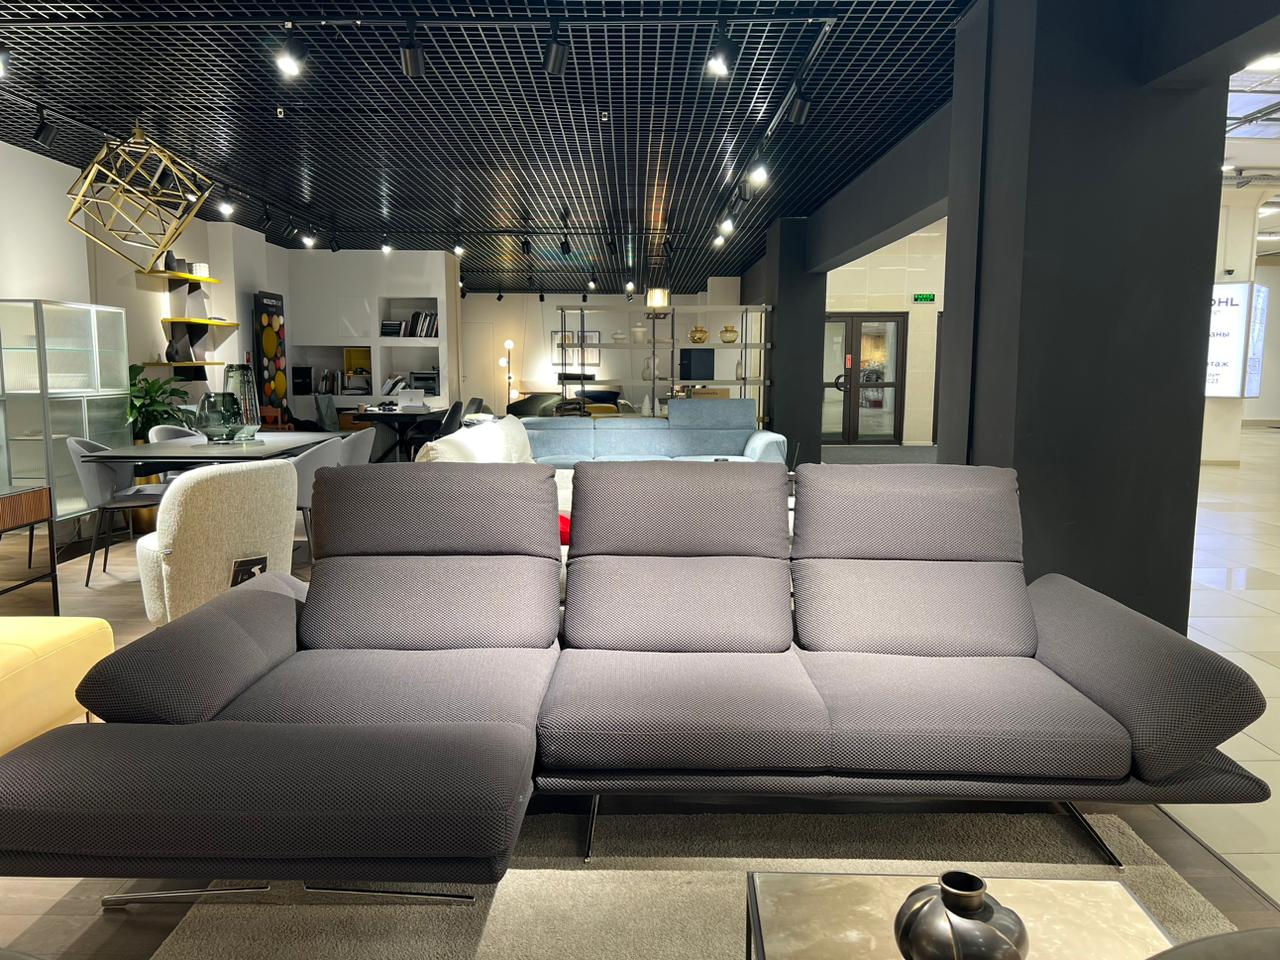 Угловой диван CHAMONIX — ₽, купить у официального дилера Nicolettihome